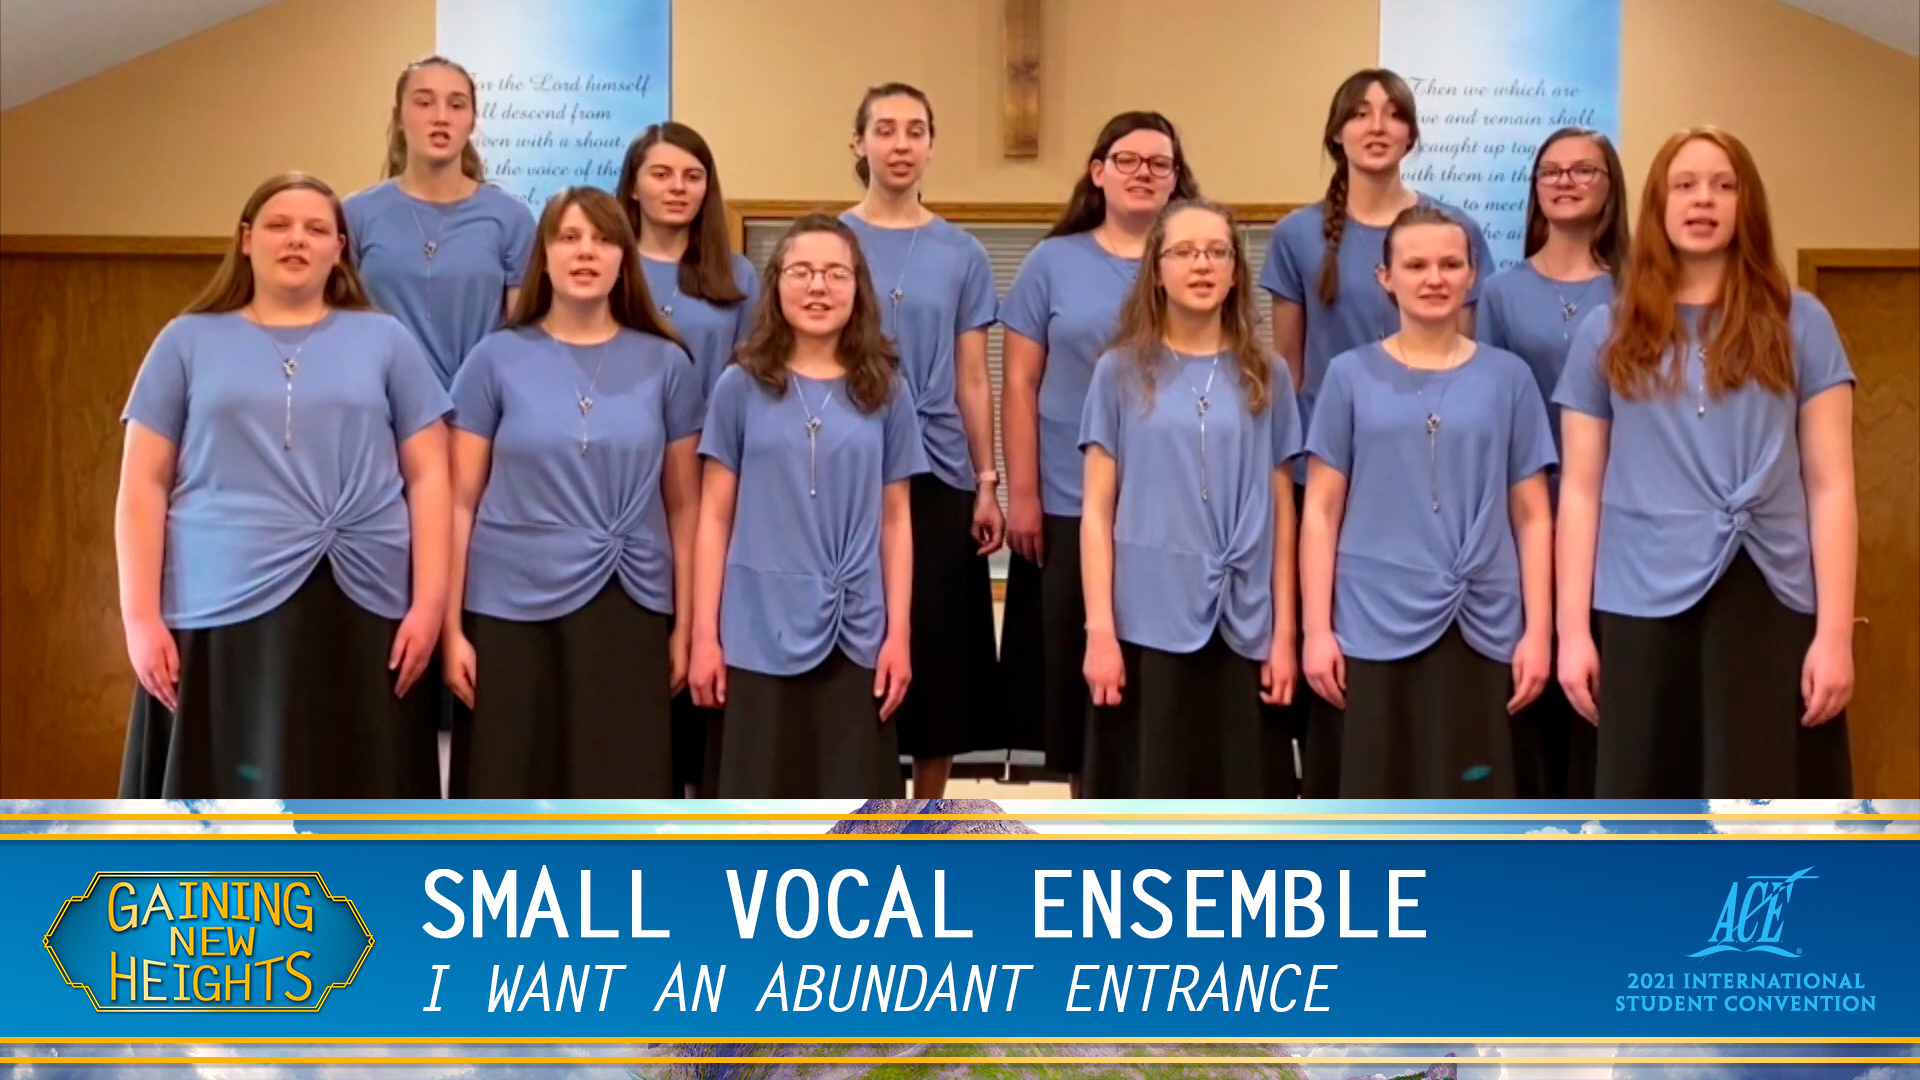 Small Vocal Ensemble, "I Want an Abundant Entrance" - ISC 2021